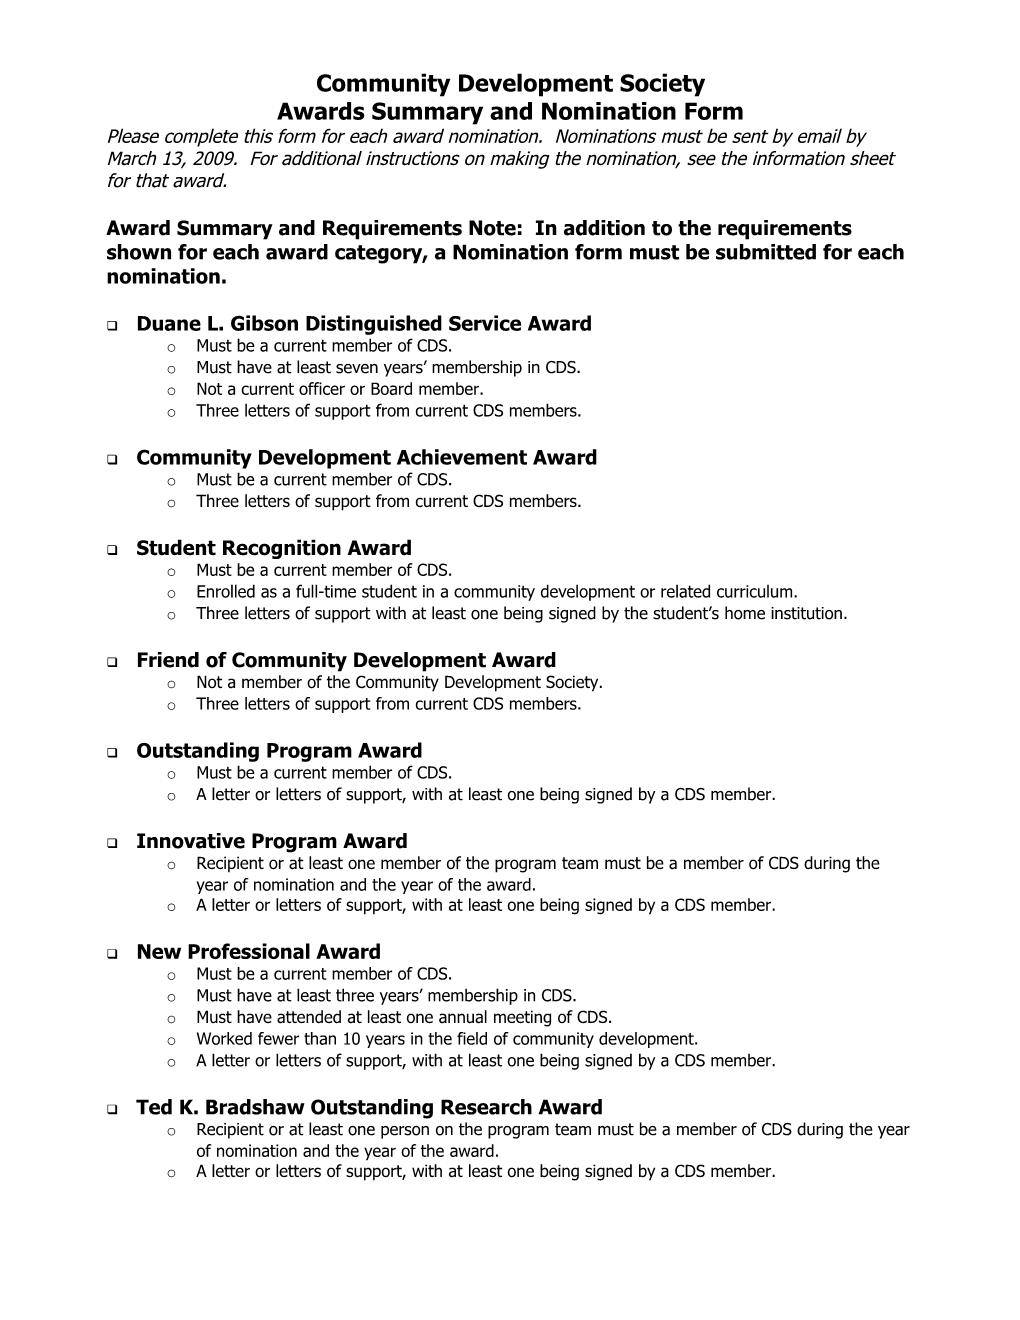 Community Development Society Awards Nomination Form